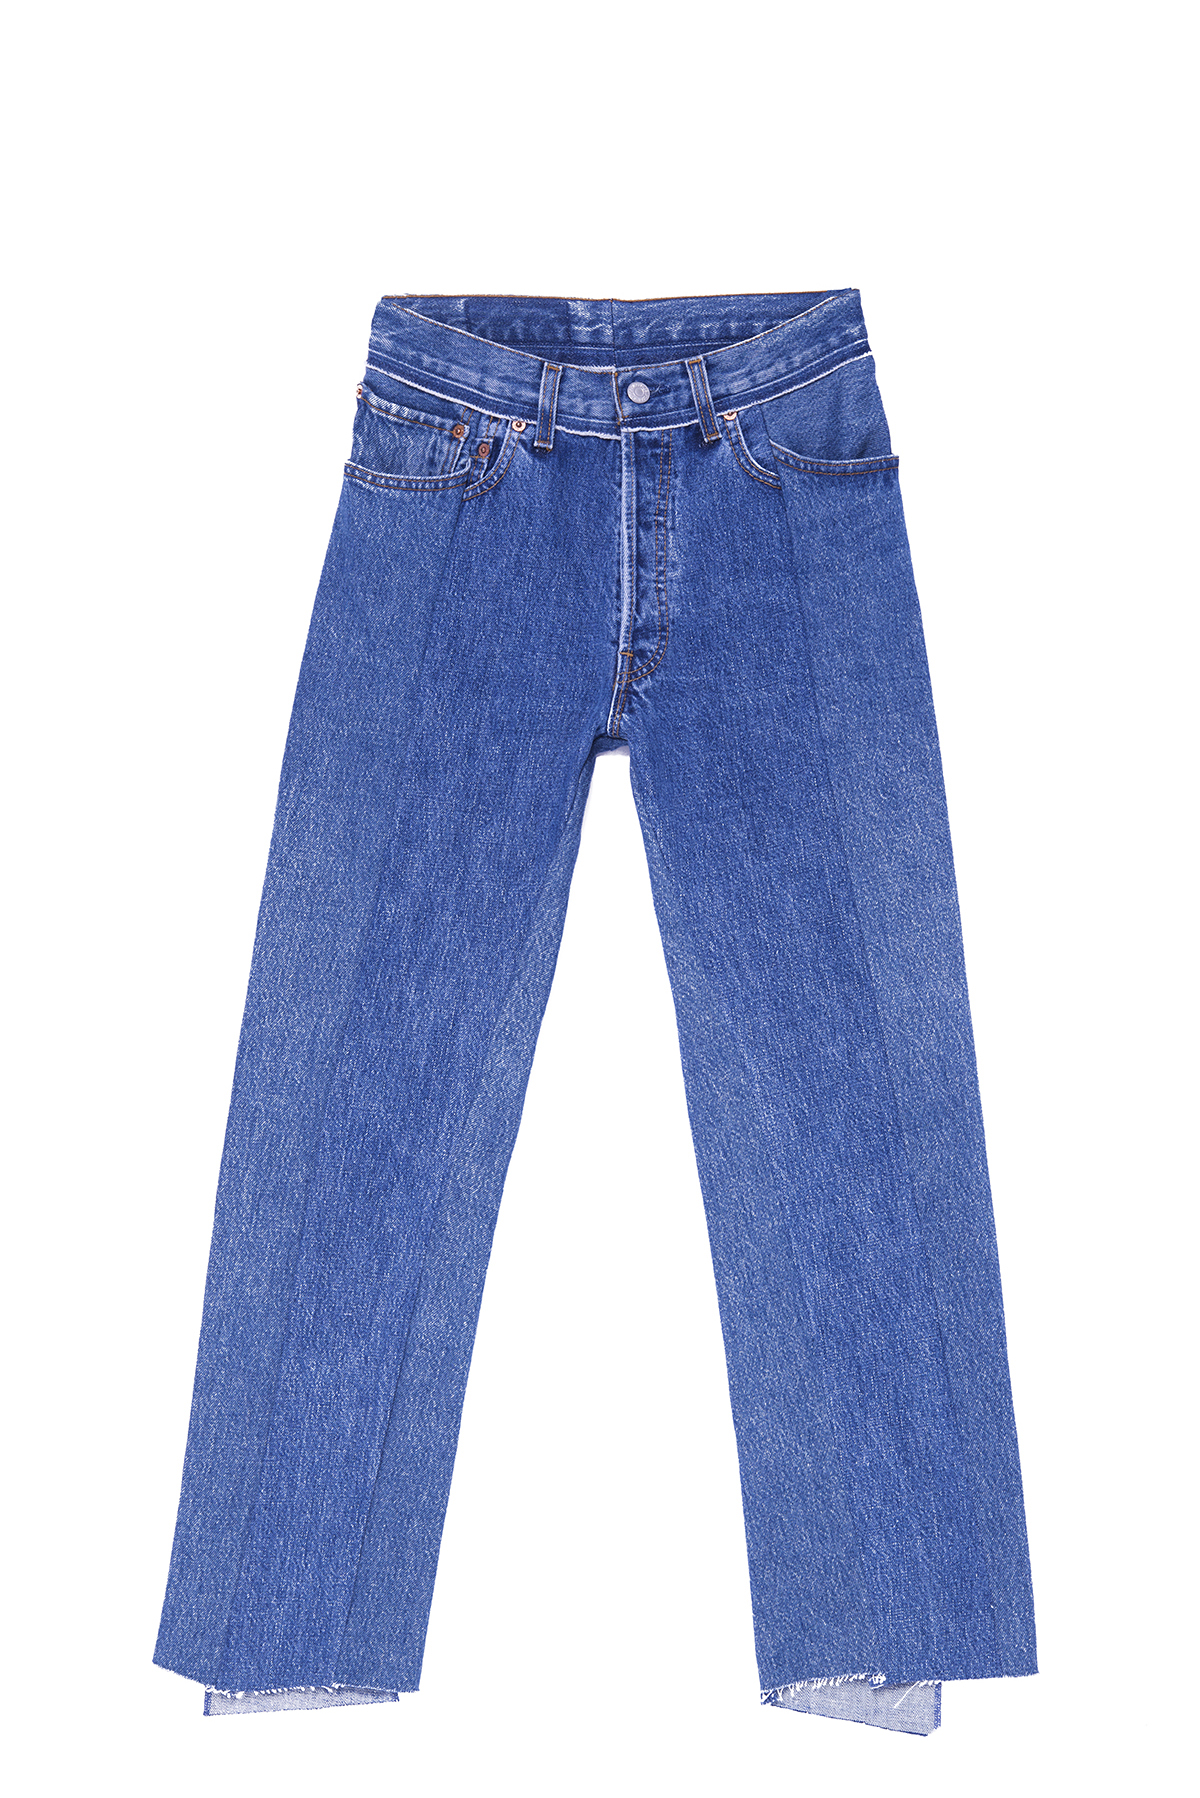 VETEMENTS jeans - KM20 Online Store